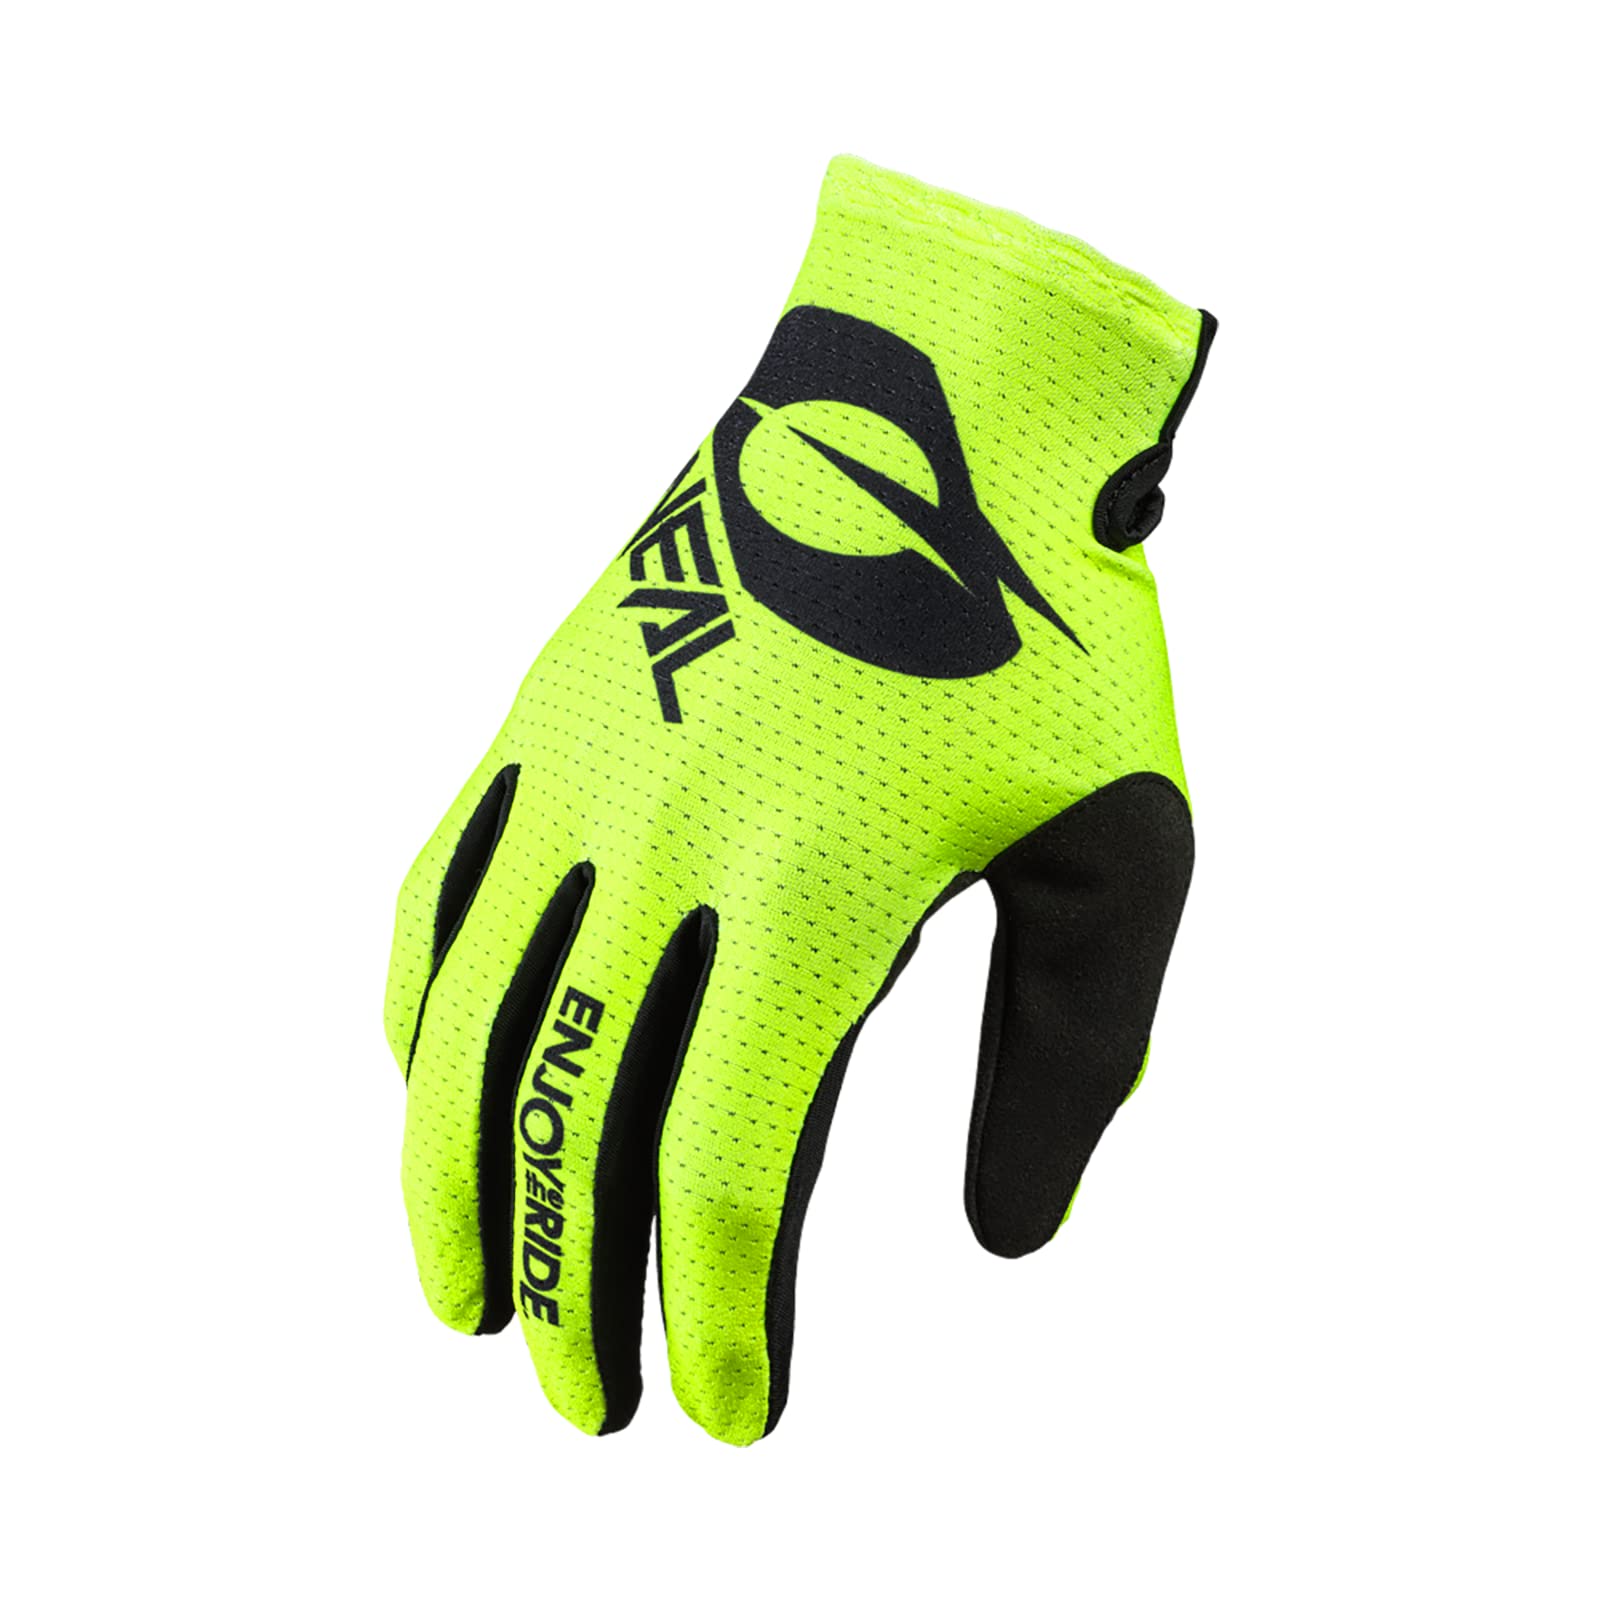 O'NEAL | Fahrrad- & Motocross-Handschuhe | MX MTB DH FR Downhill Freeride | Langlebige, Flexible Materialien, belüftete Handoberseite | Matrix Glove | Erwachsene | Schwarz Neon-Gelb | Größe M von O'NEAL